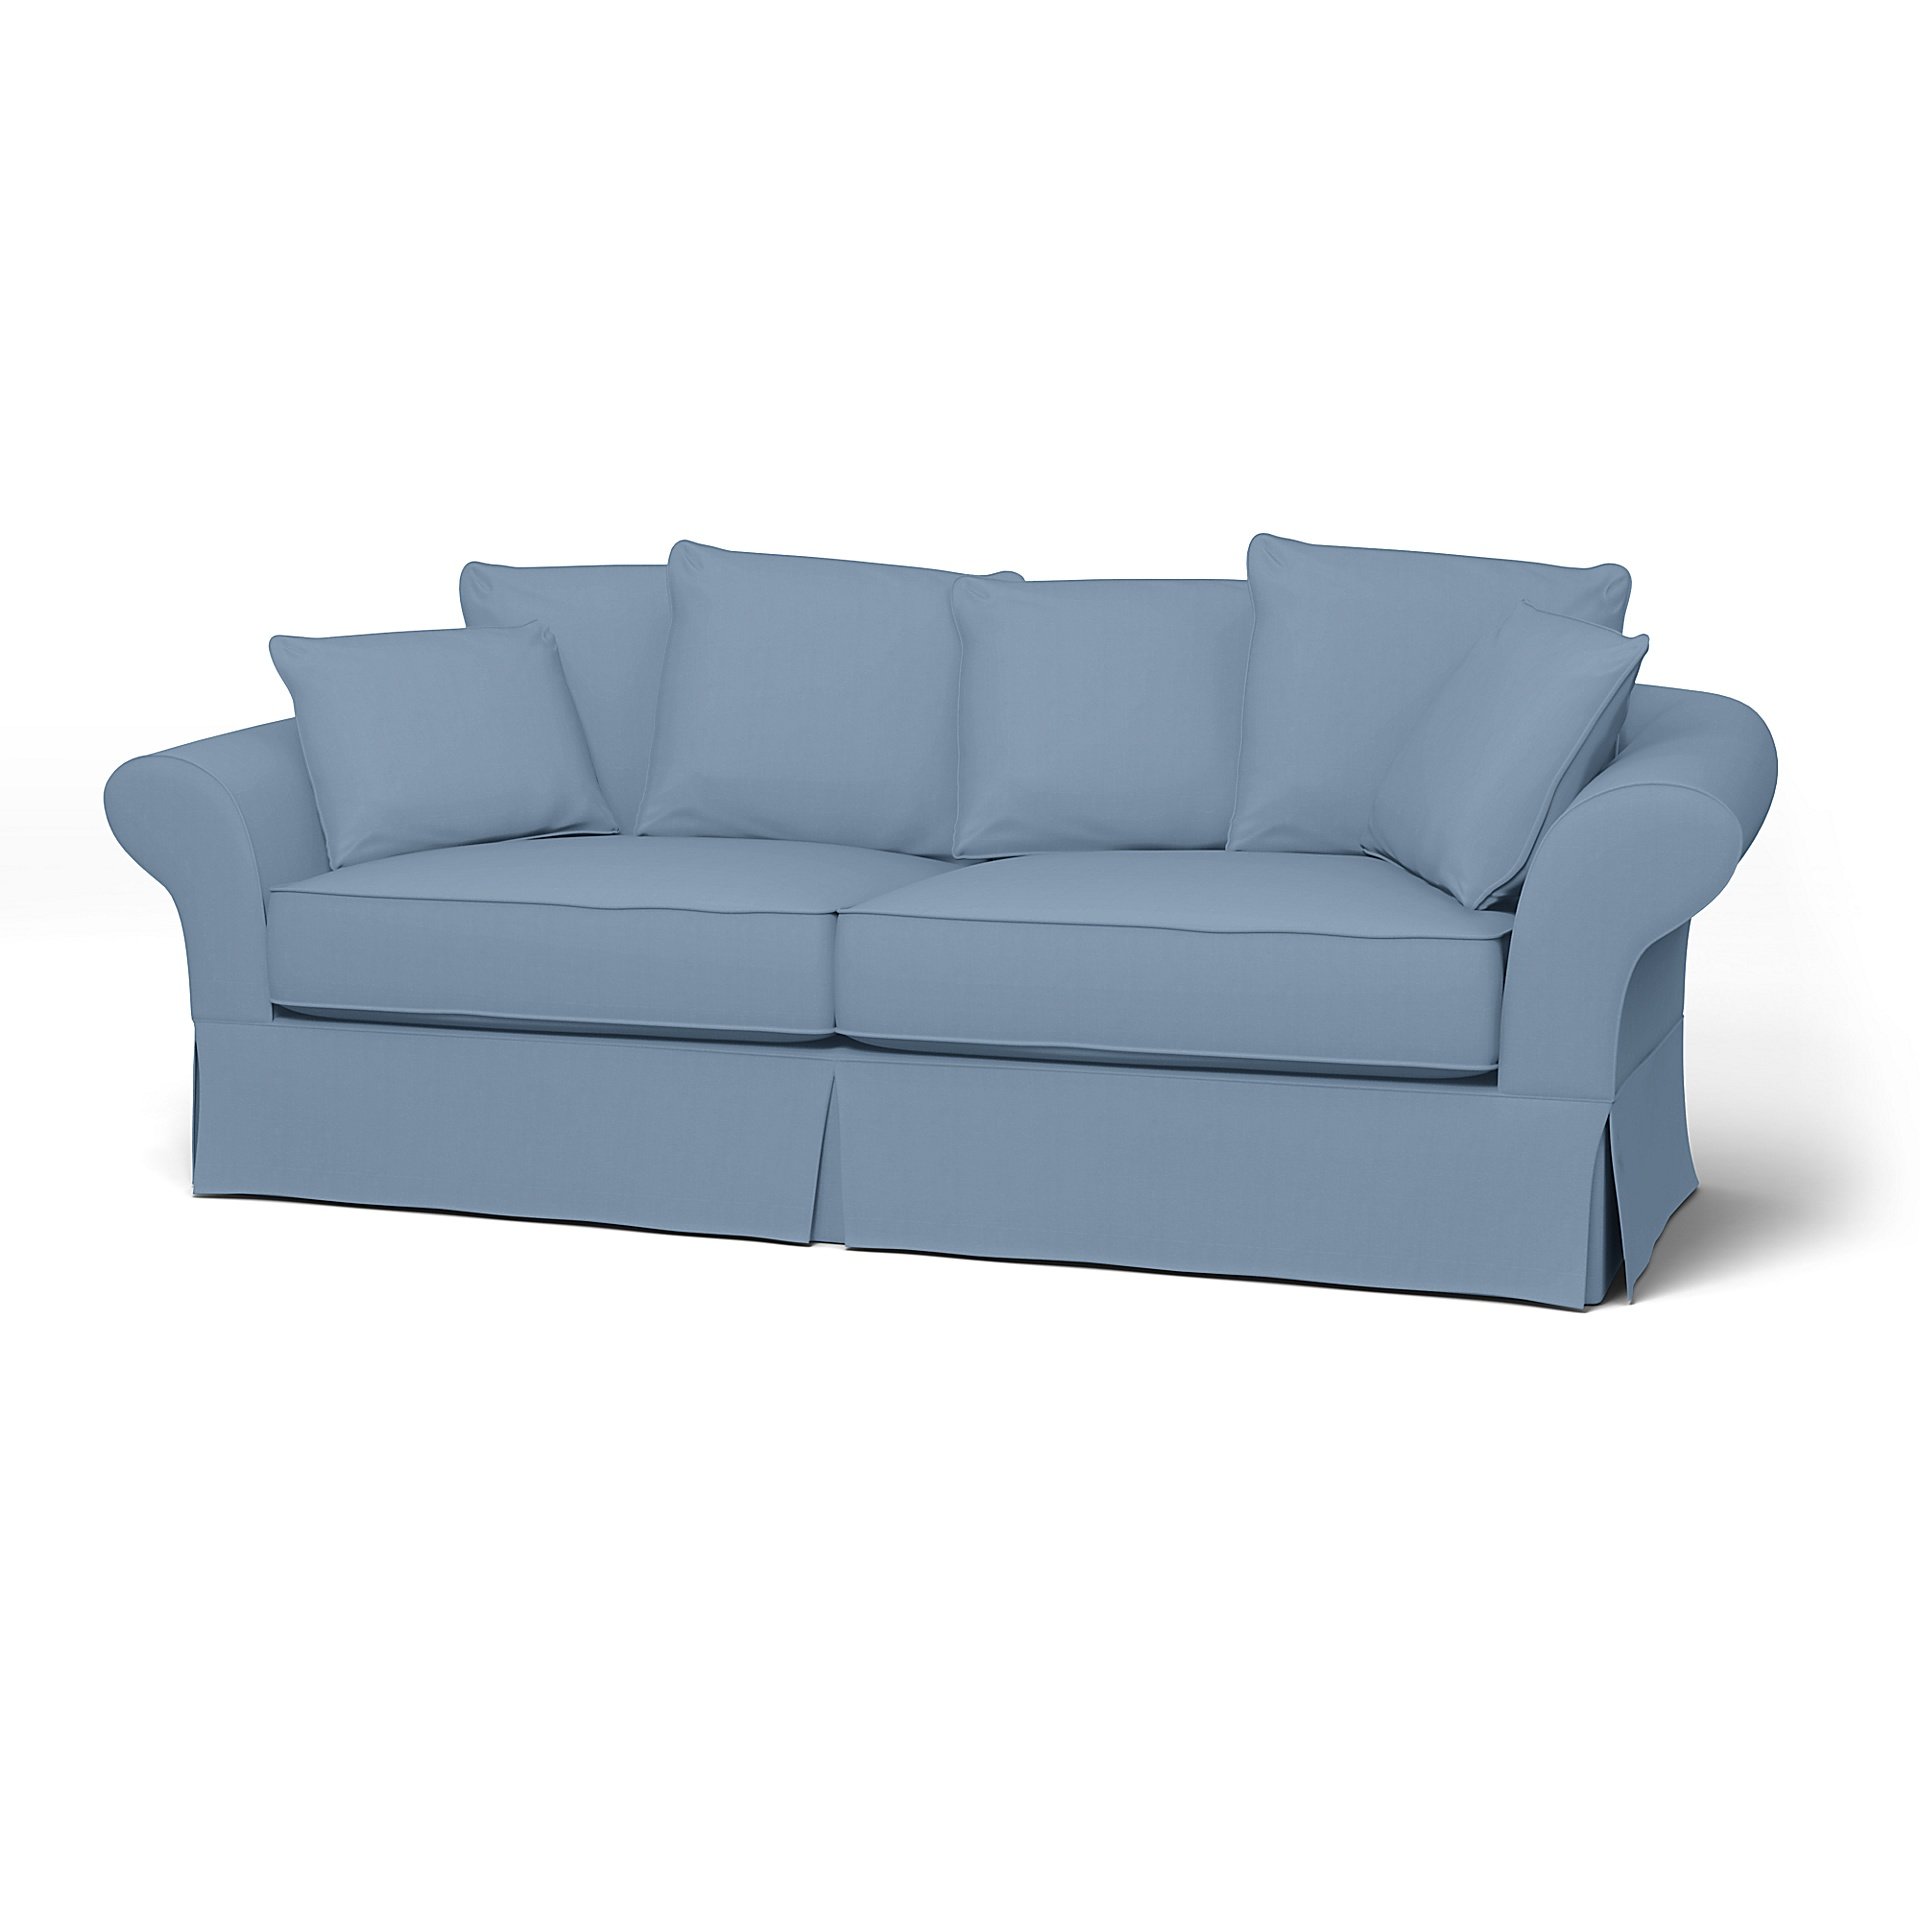 IKEA - Backamo 3 Seater Sofa Cover, Dusty Blue, Cotton - Bemz